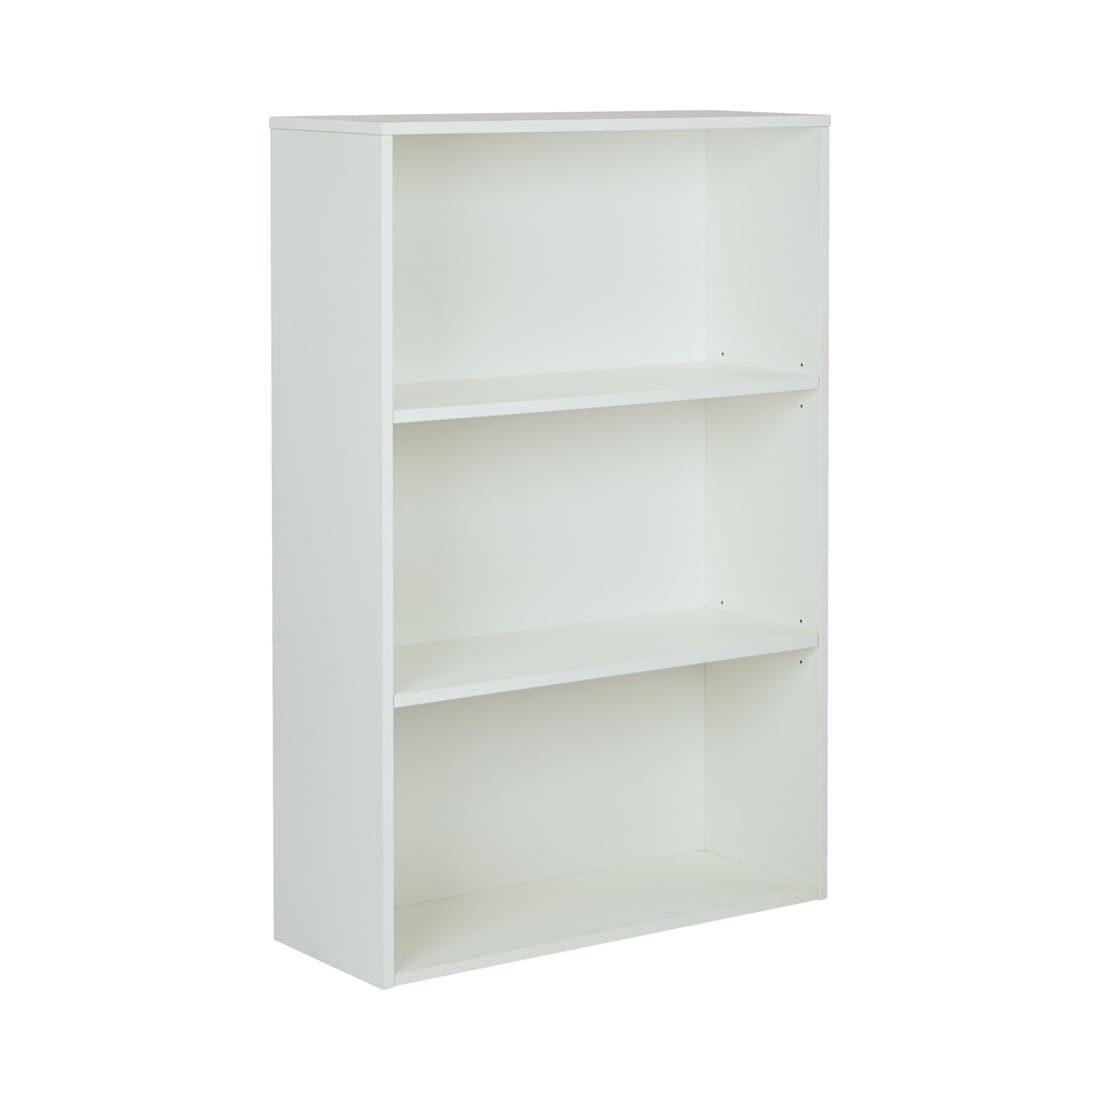 Prado 48” 3-Shelf Bookcase with 3/4” Shelves and 2 Adjustable shelves in White.